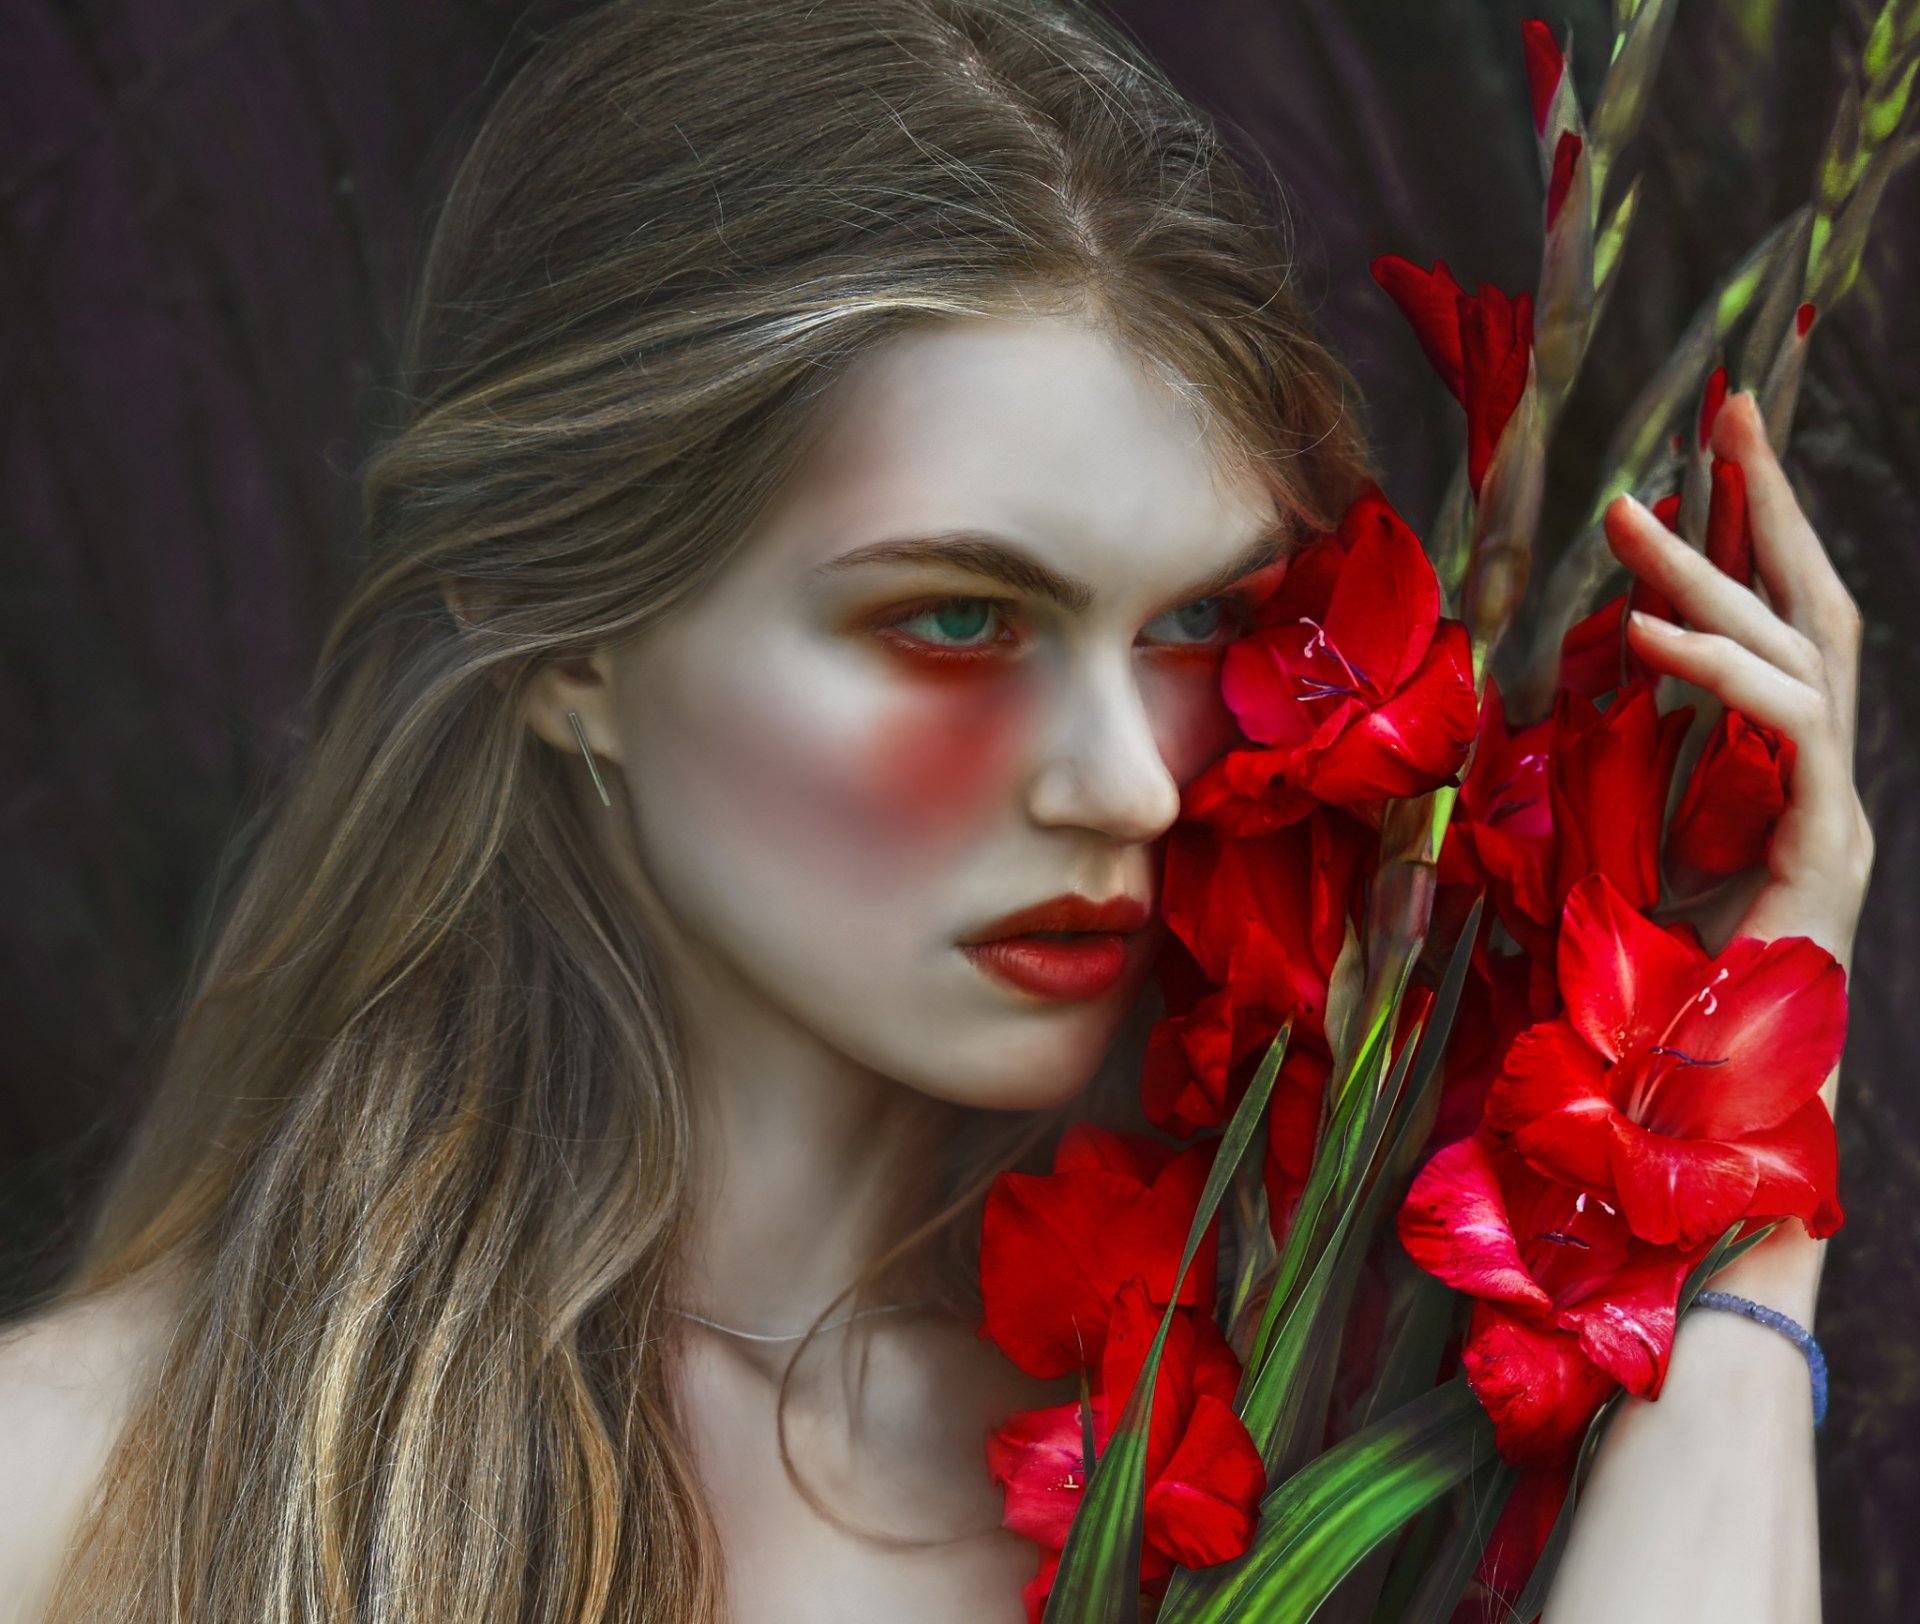 Tears and Gladiolus by Agnieszka Lorek